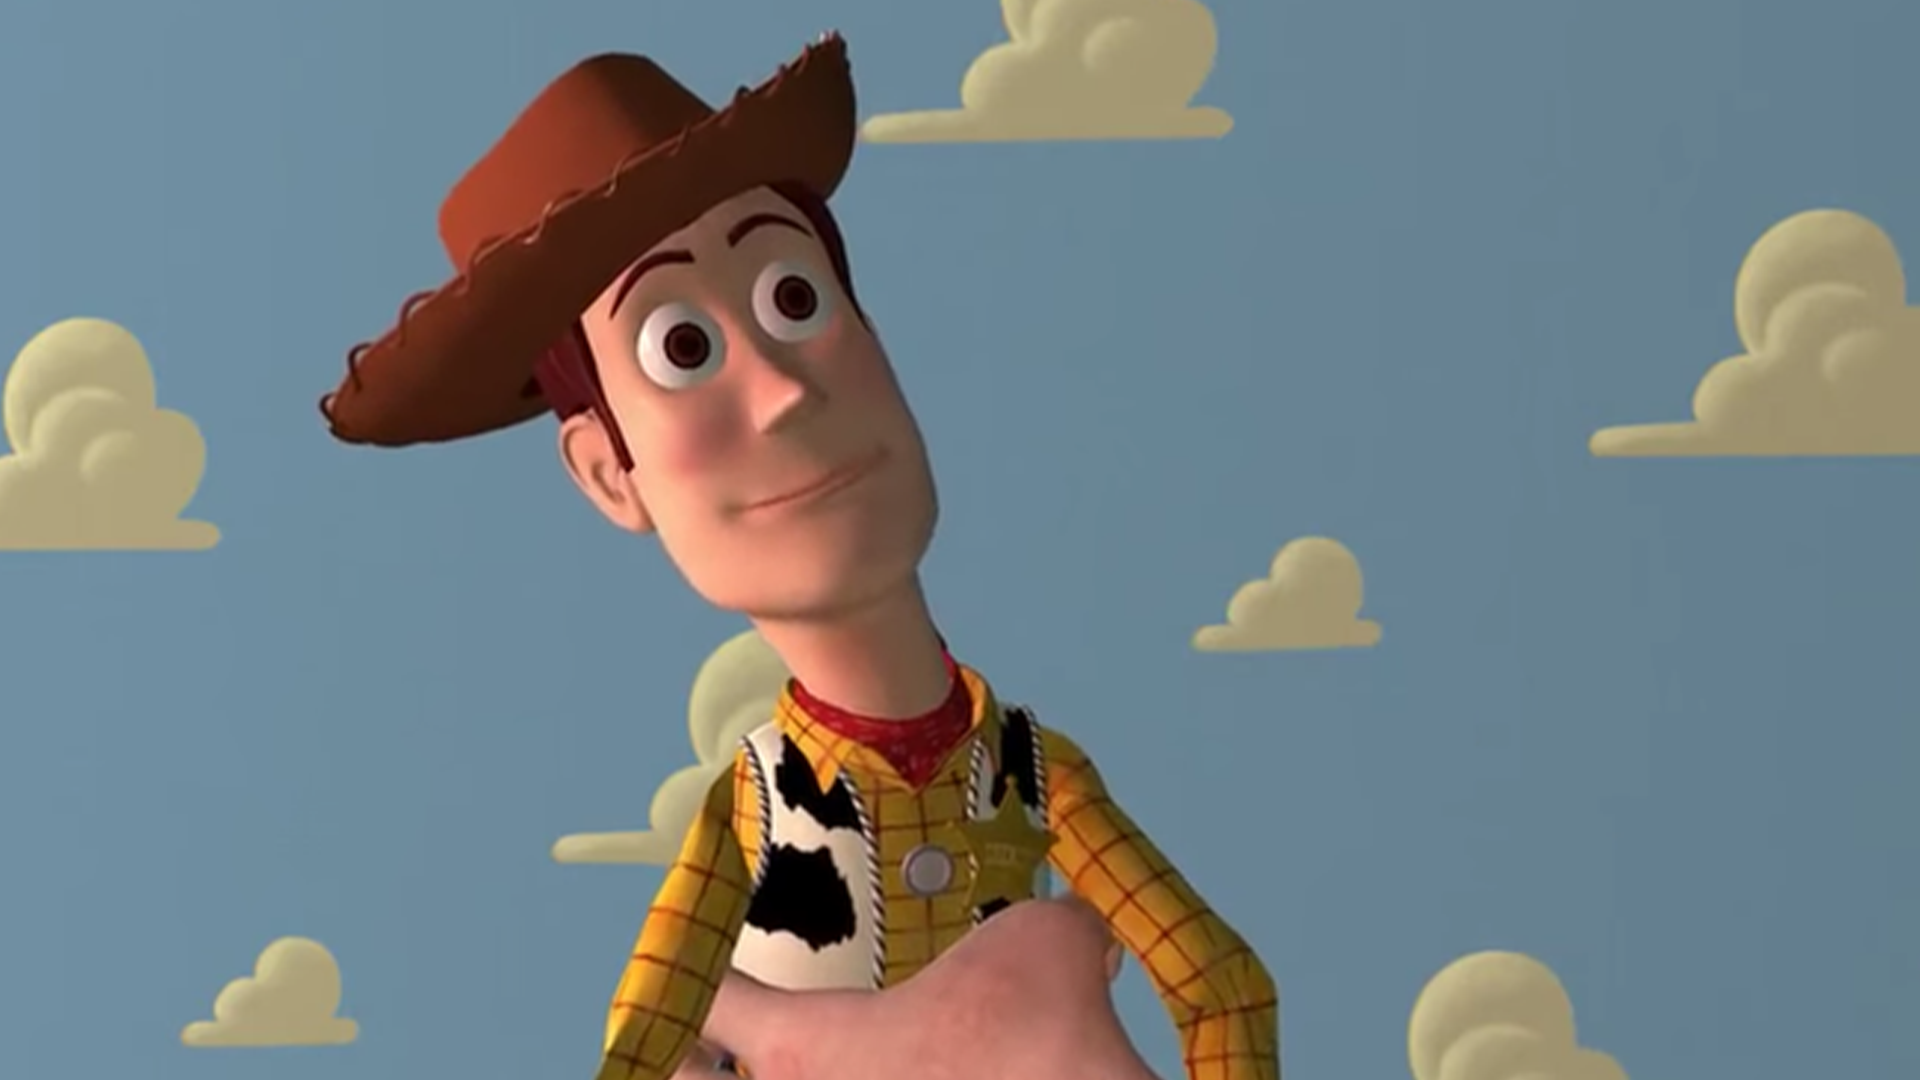 Toy Story | Pixar | Bonnie Arnold
Ralph Guggenheim | John Lasseter